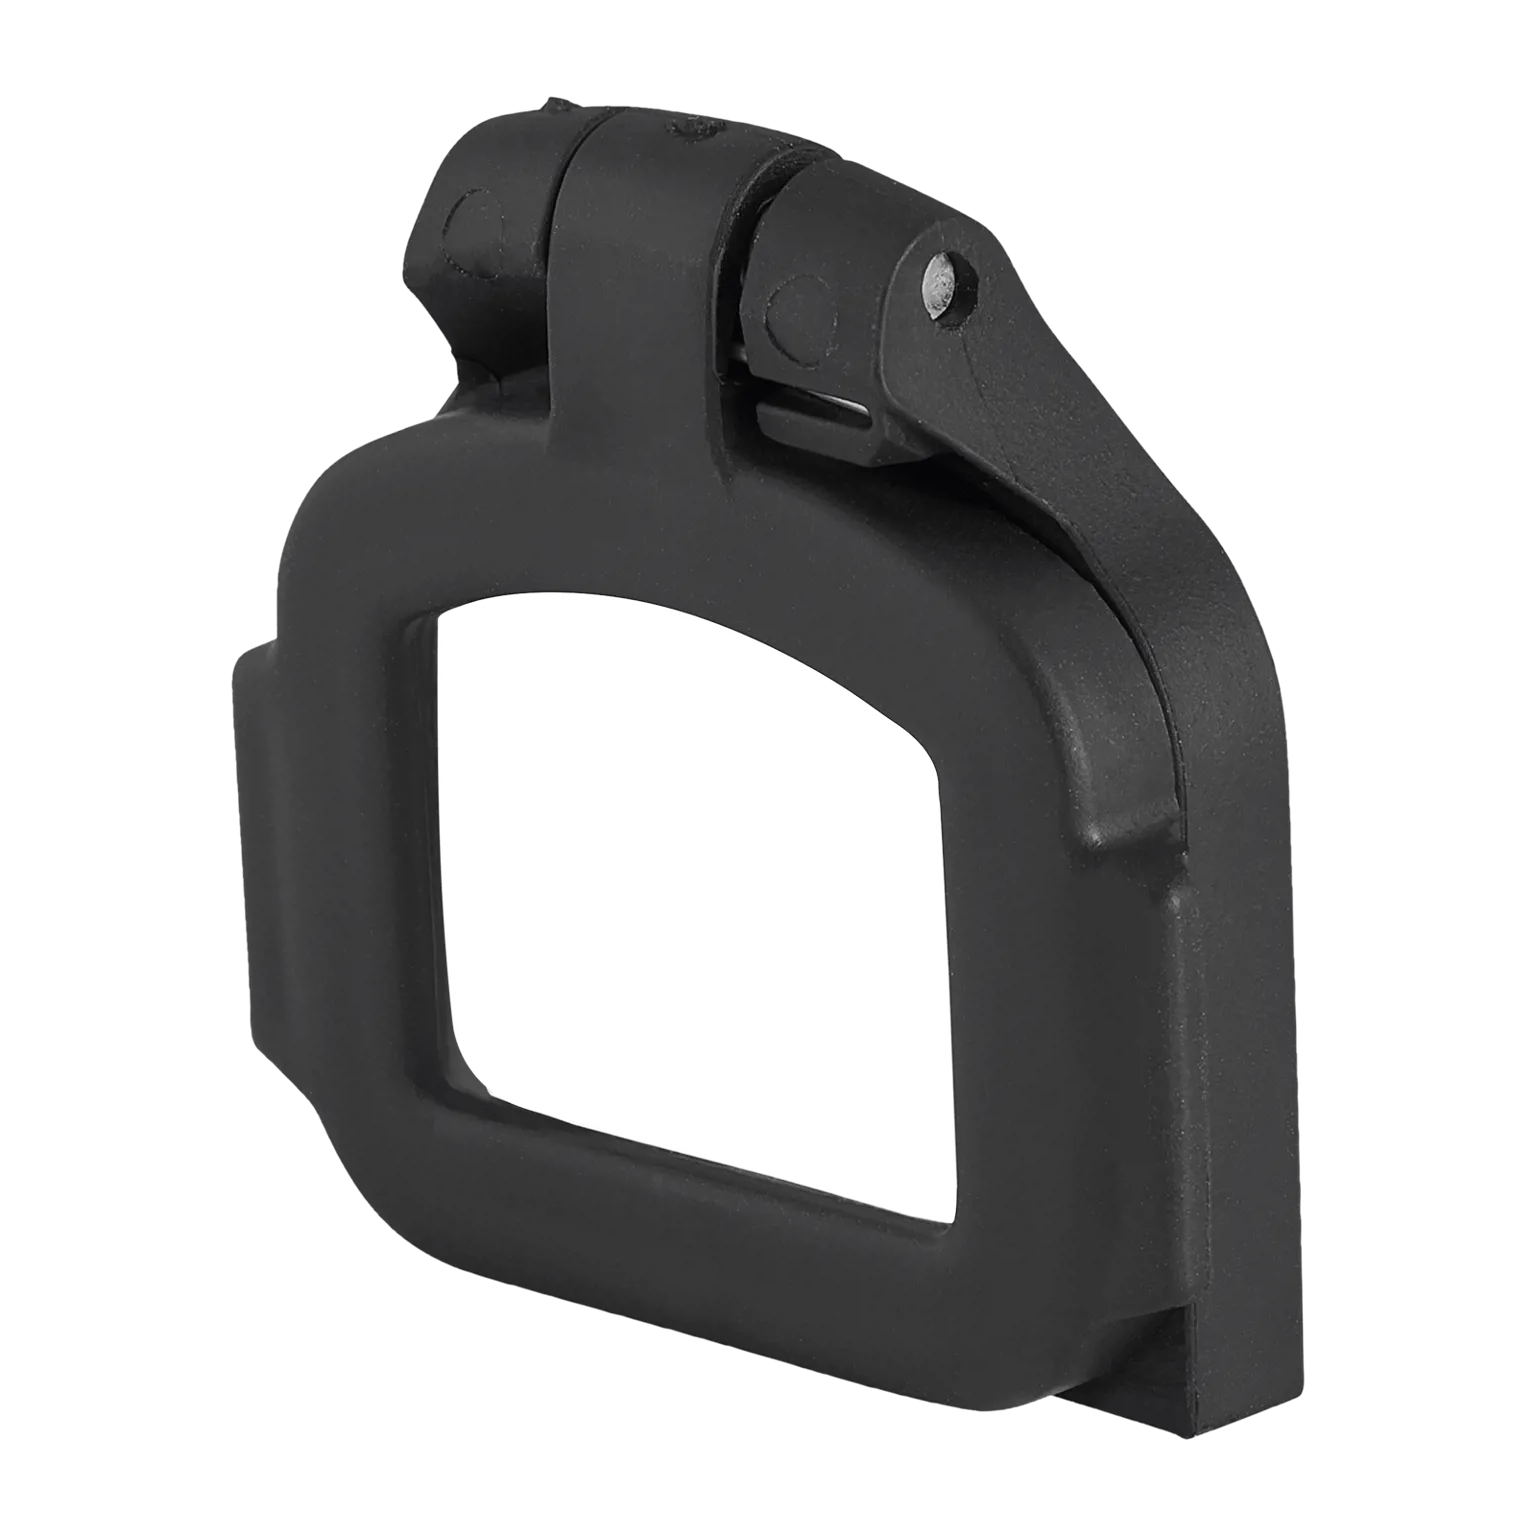 Lens cover flip-up - Rear Transparent for Acro C-2™/P-2™ - 1